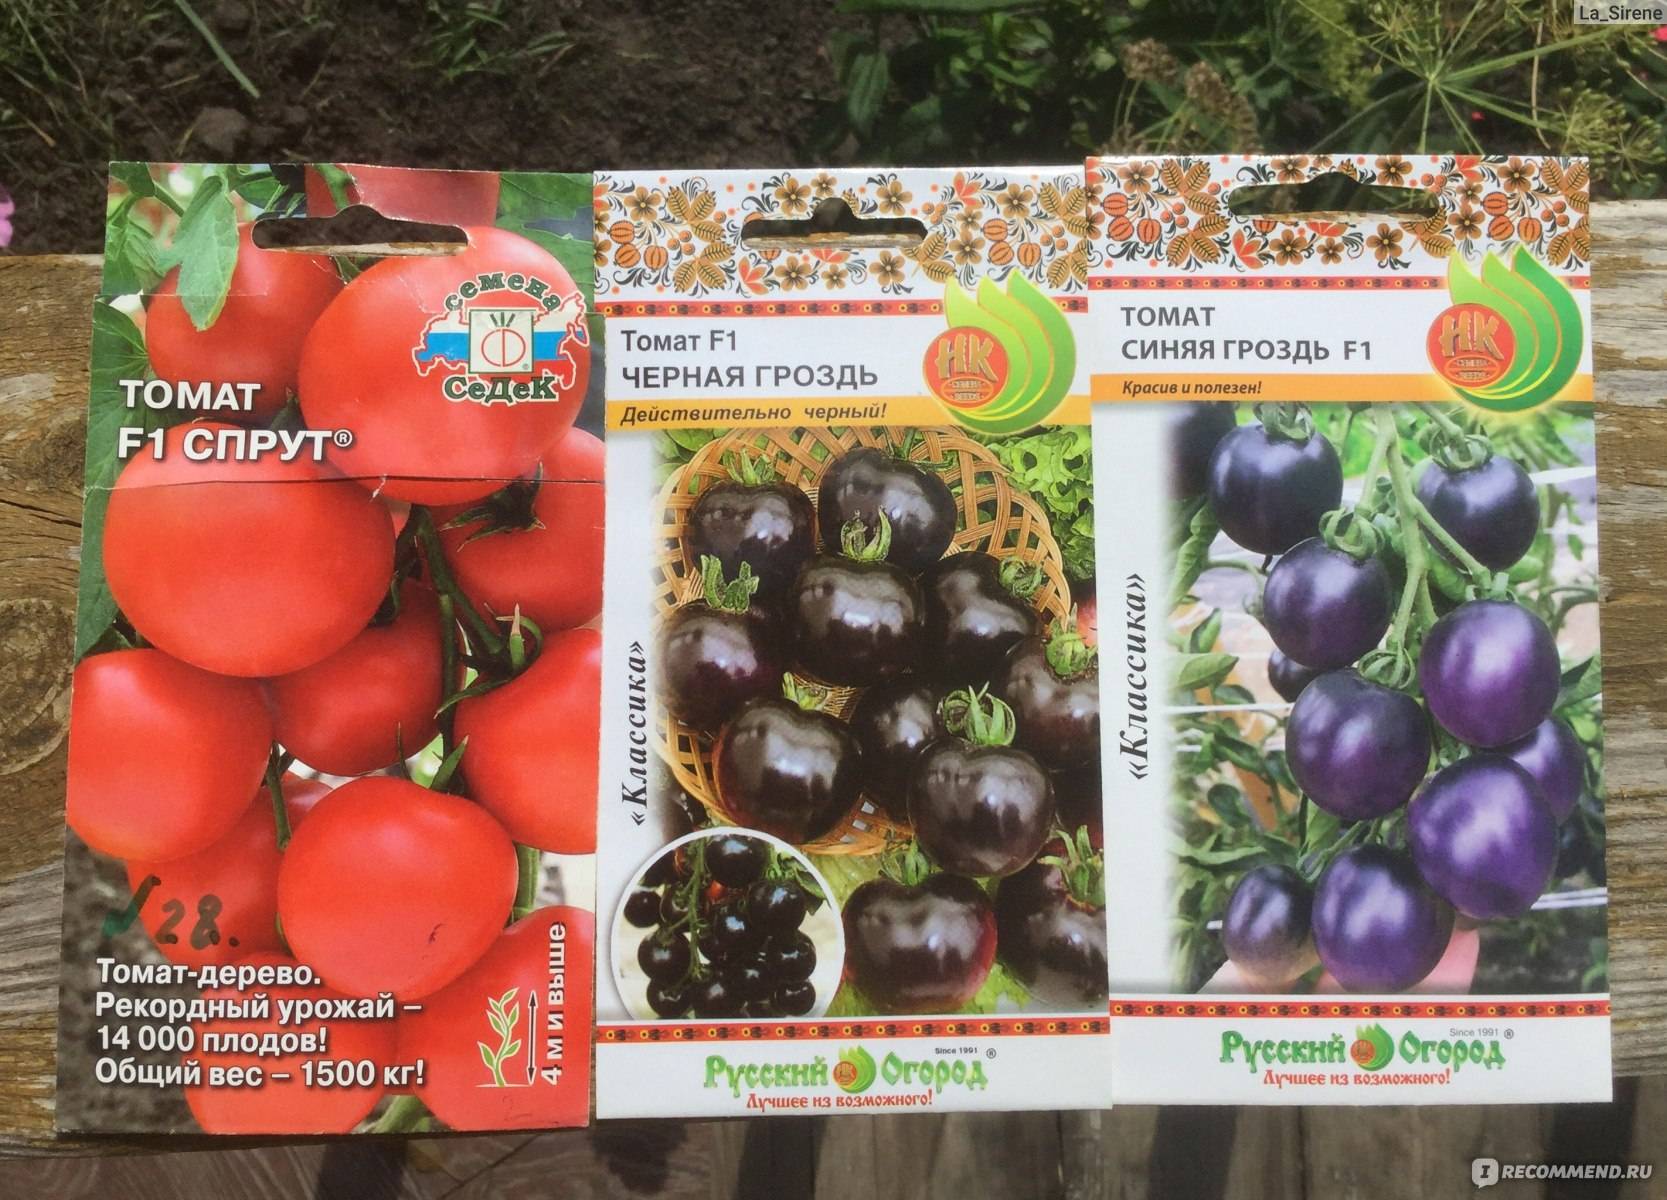 Спрут томат - характеристика и описание сорта